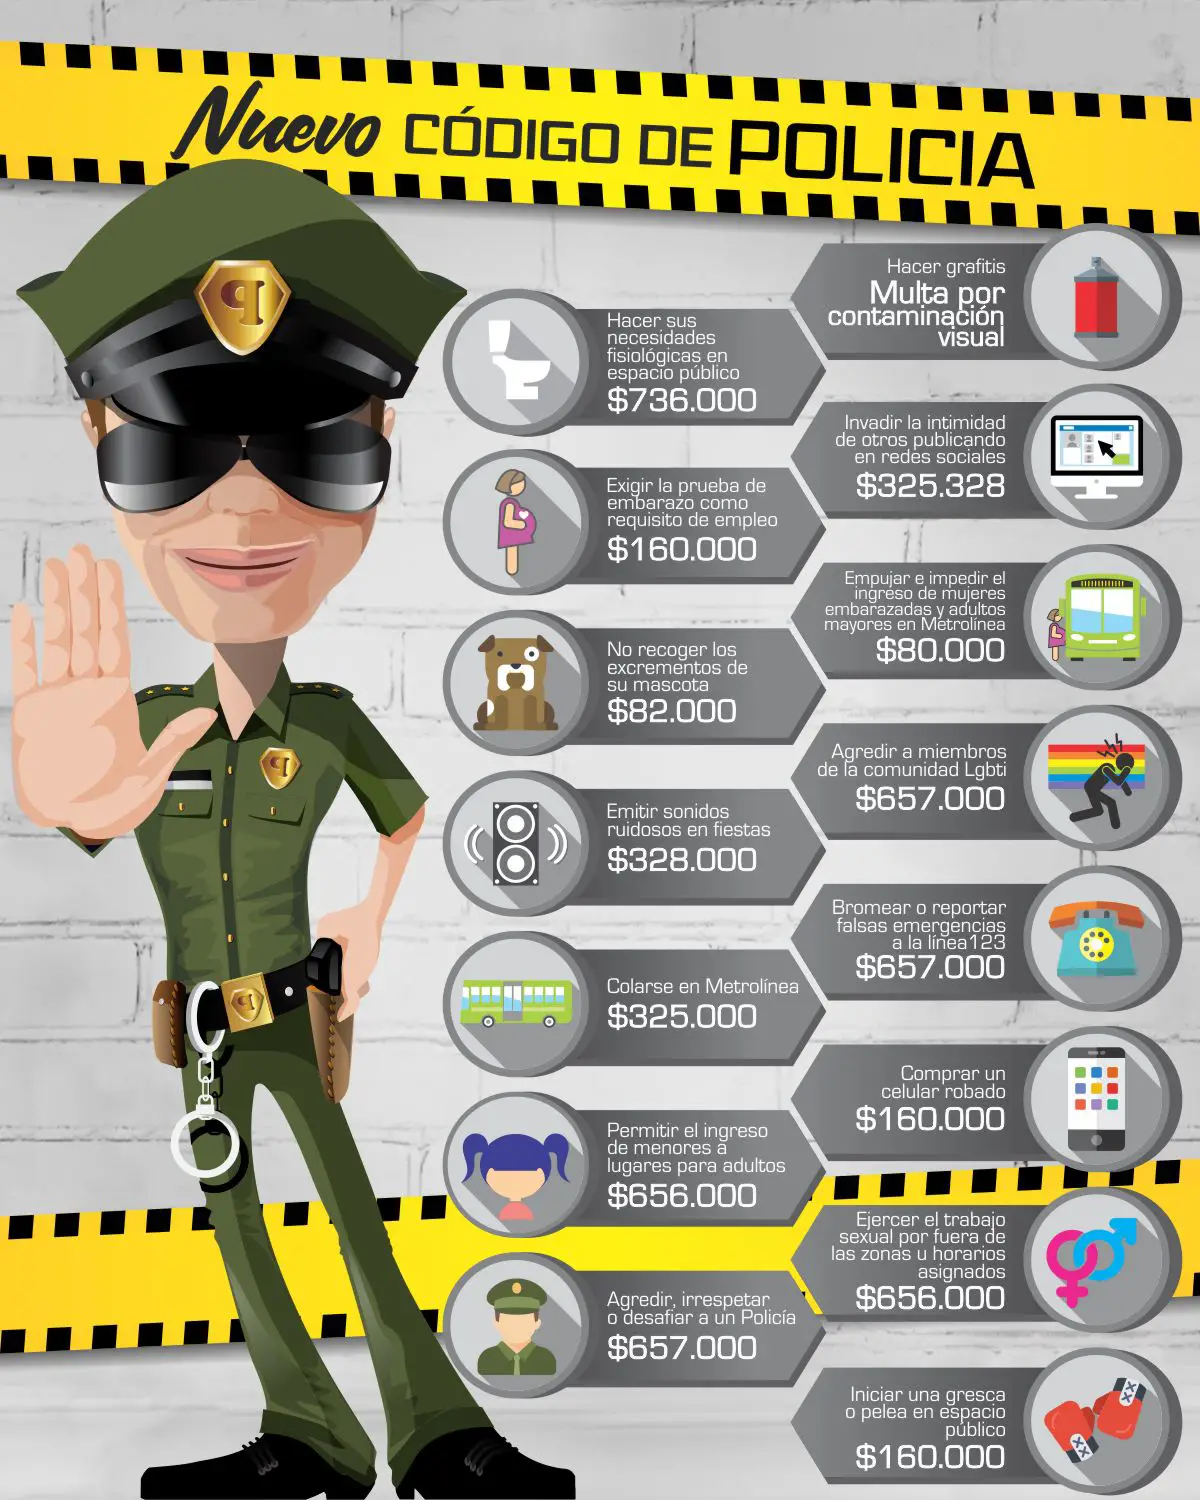 new police code in medellin colombia